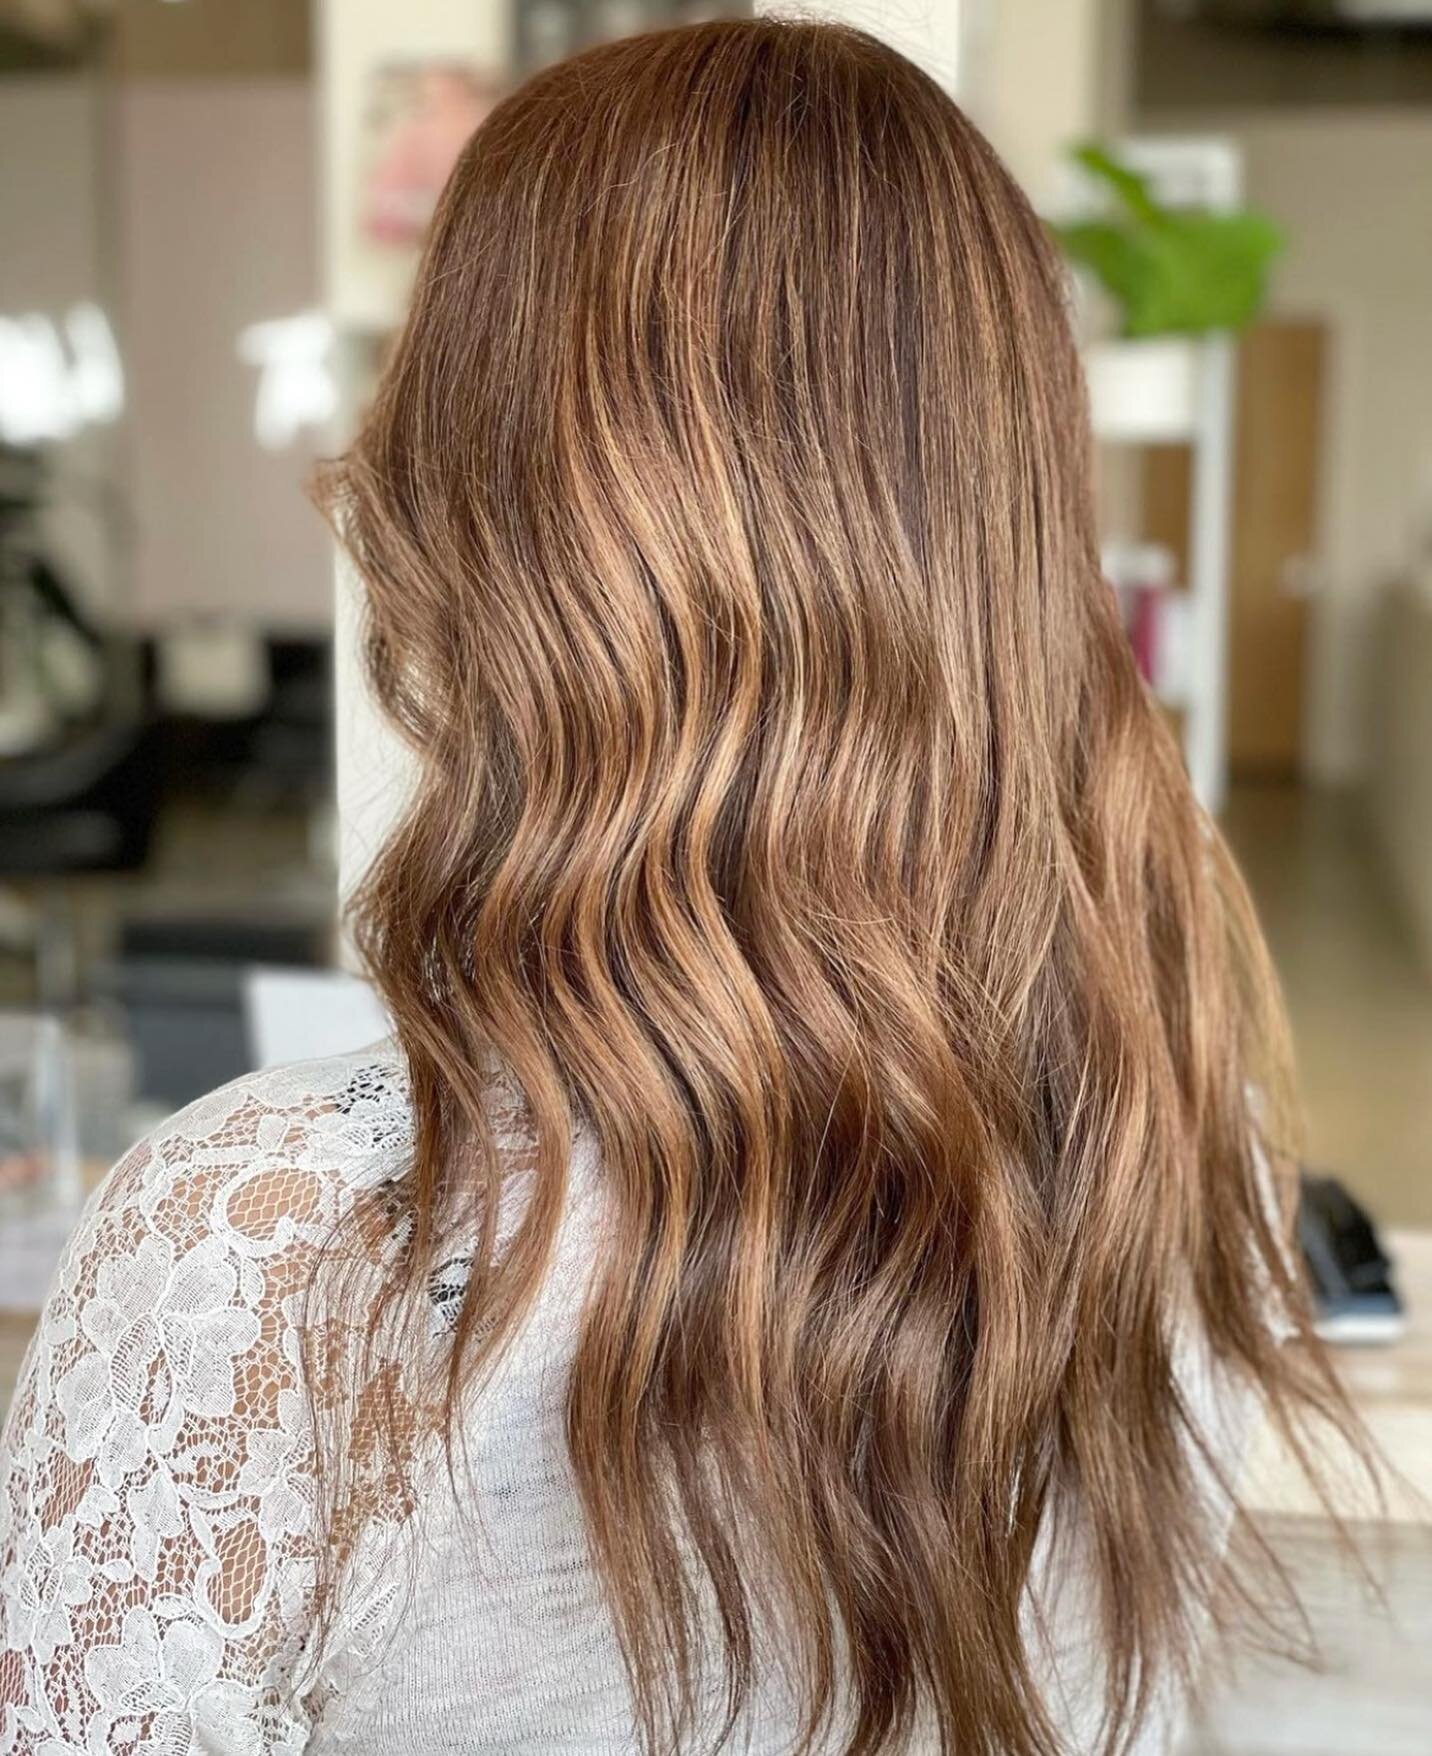 Caramel tones for summer!!☀️ hair by: @alicia_at_lavish 
.
.
.
.
.
#spokanestylist #spokanesalon #pnw #spokanedoesntsuck #spokane #spokanehair #downtownspokane #washingtonhair #hairstyles #hair #haircolor #haircut #hairpost #davinescolor #davines #da